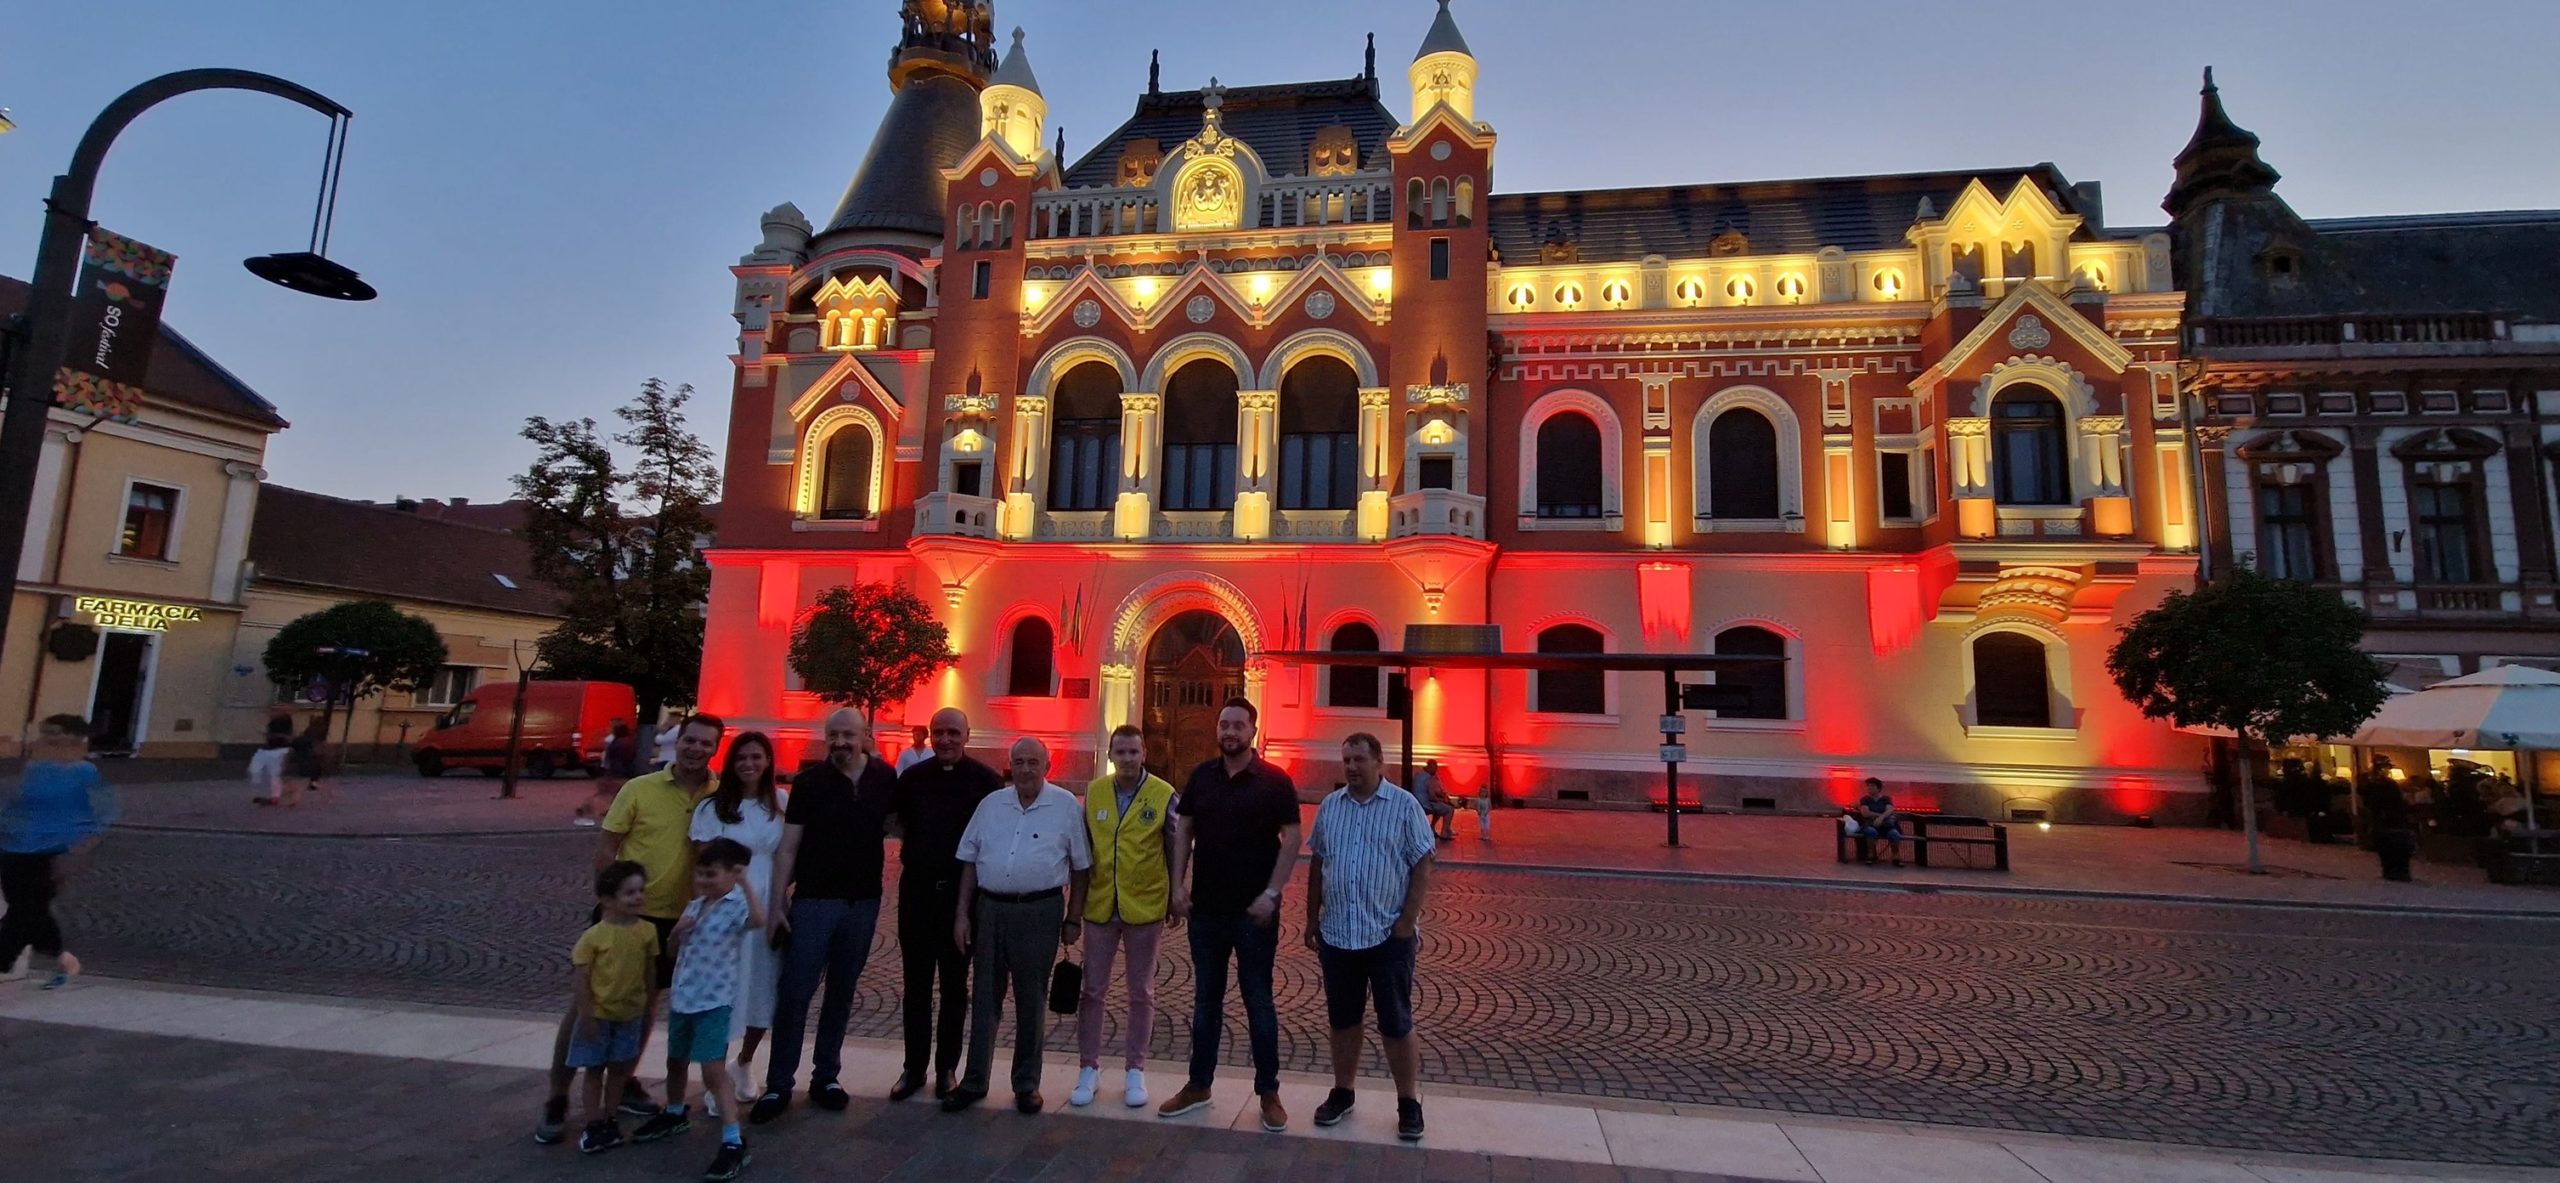 FOTO: Palat Episcopal Greco-Catolic iluminat în roșu 24.07.2022